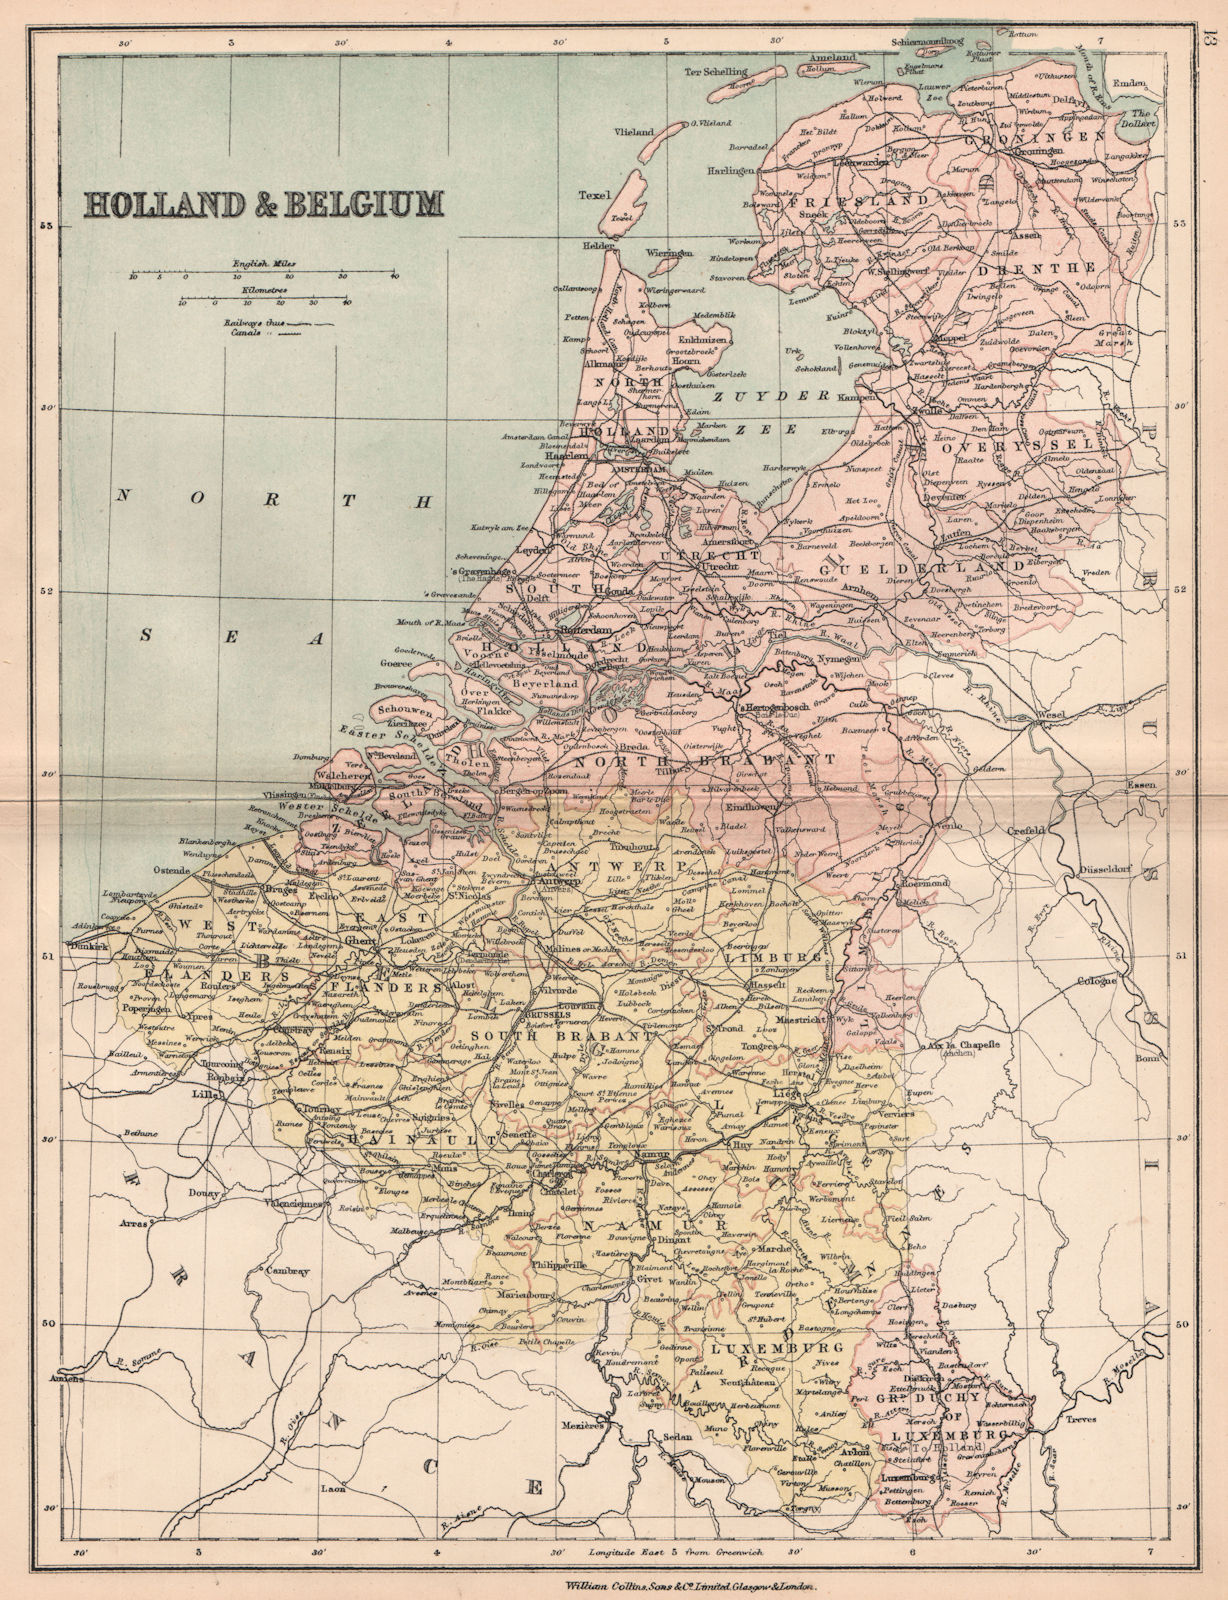 BENELUX. 'Holland & Belgium'. Luxembourg. BARTHOLOMEW 1878 old antique map